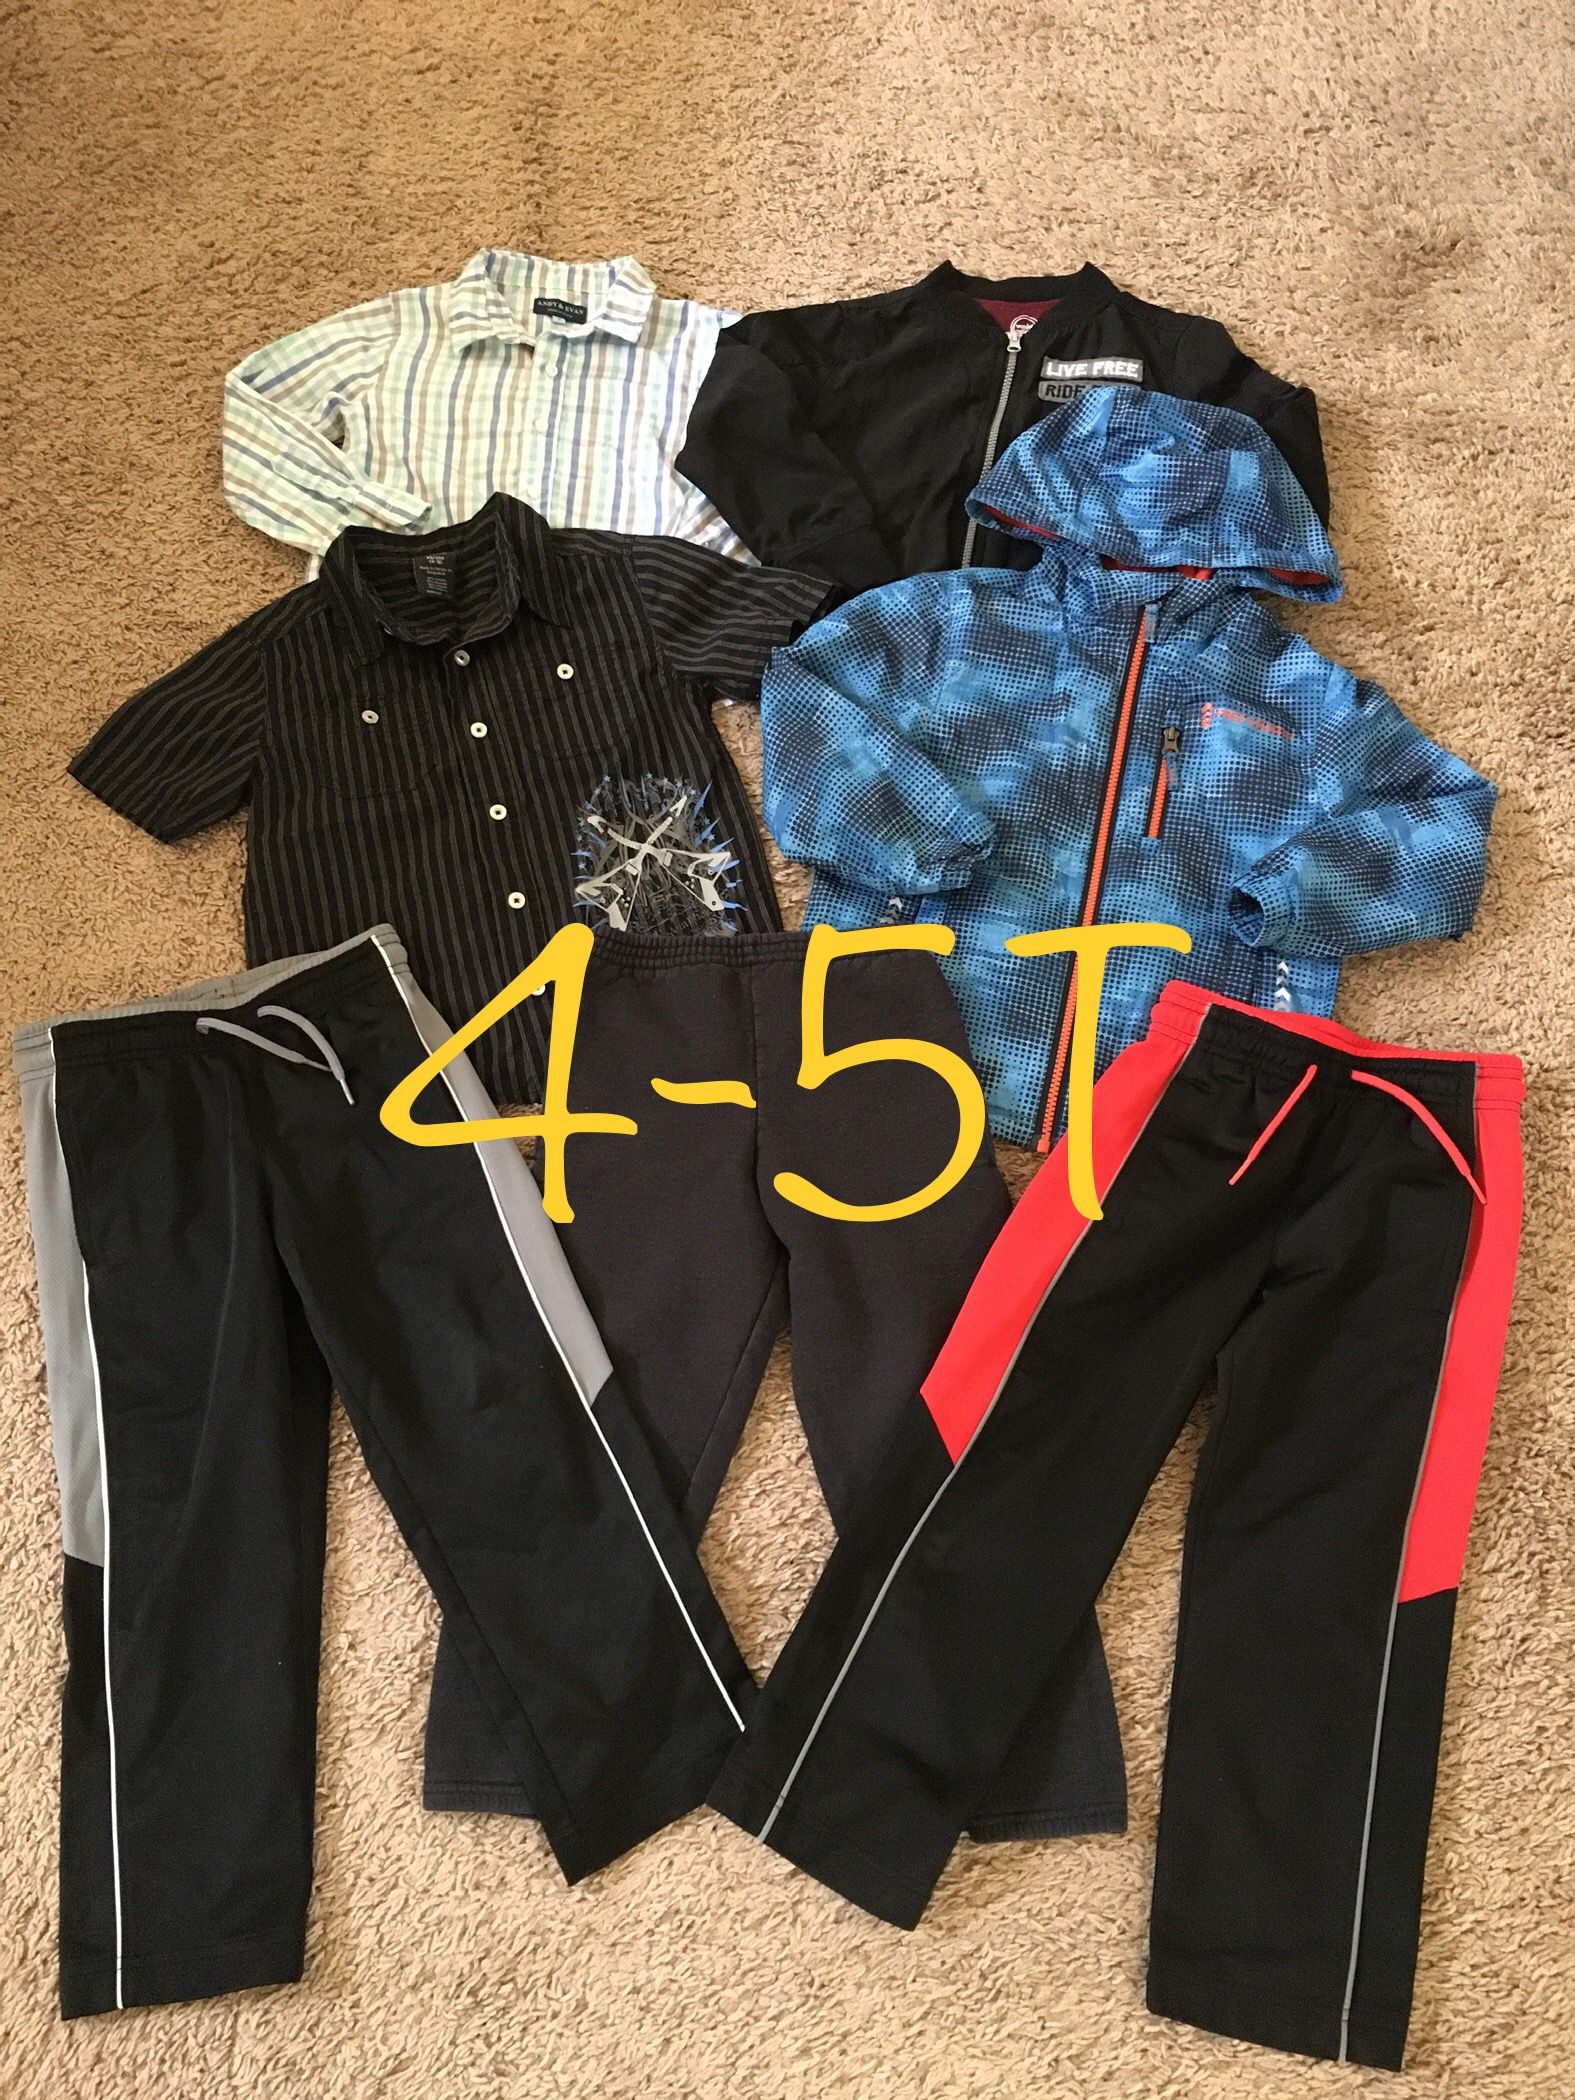 Winter/fall Boy Clothes, Pants, Long/short Sleeve Shirts, Hooded Jacket Size 4t-5t